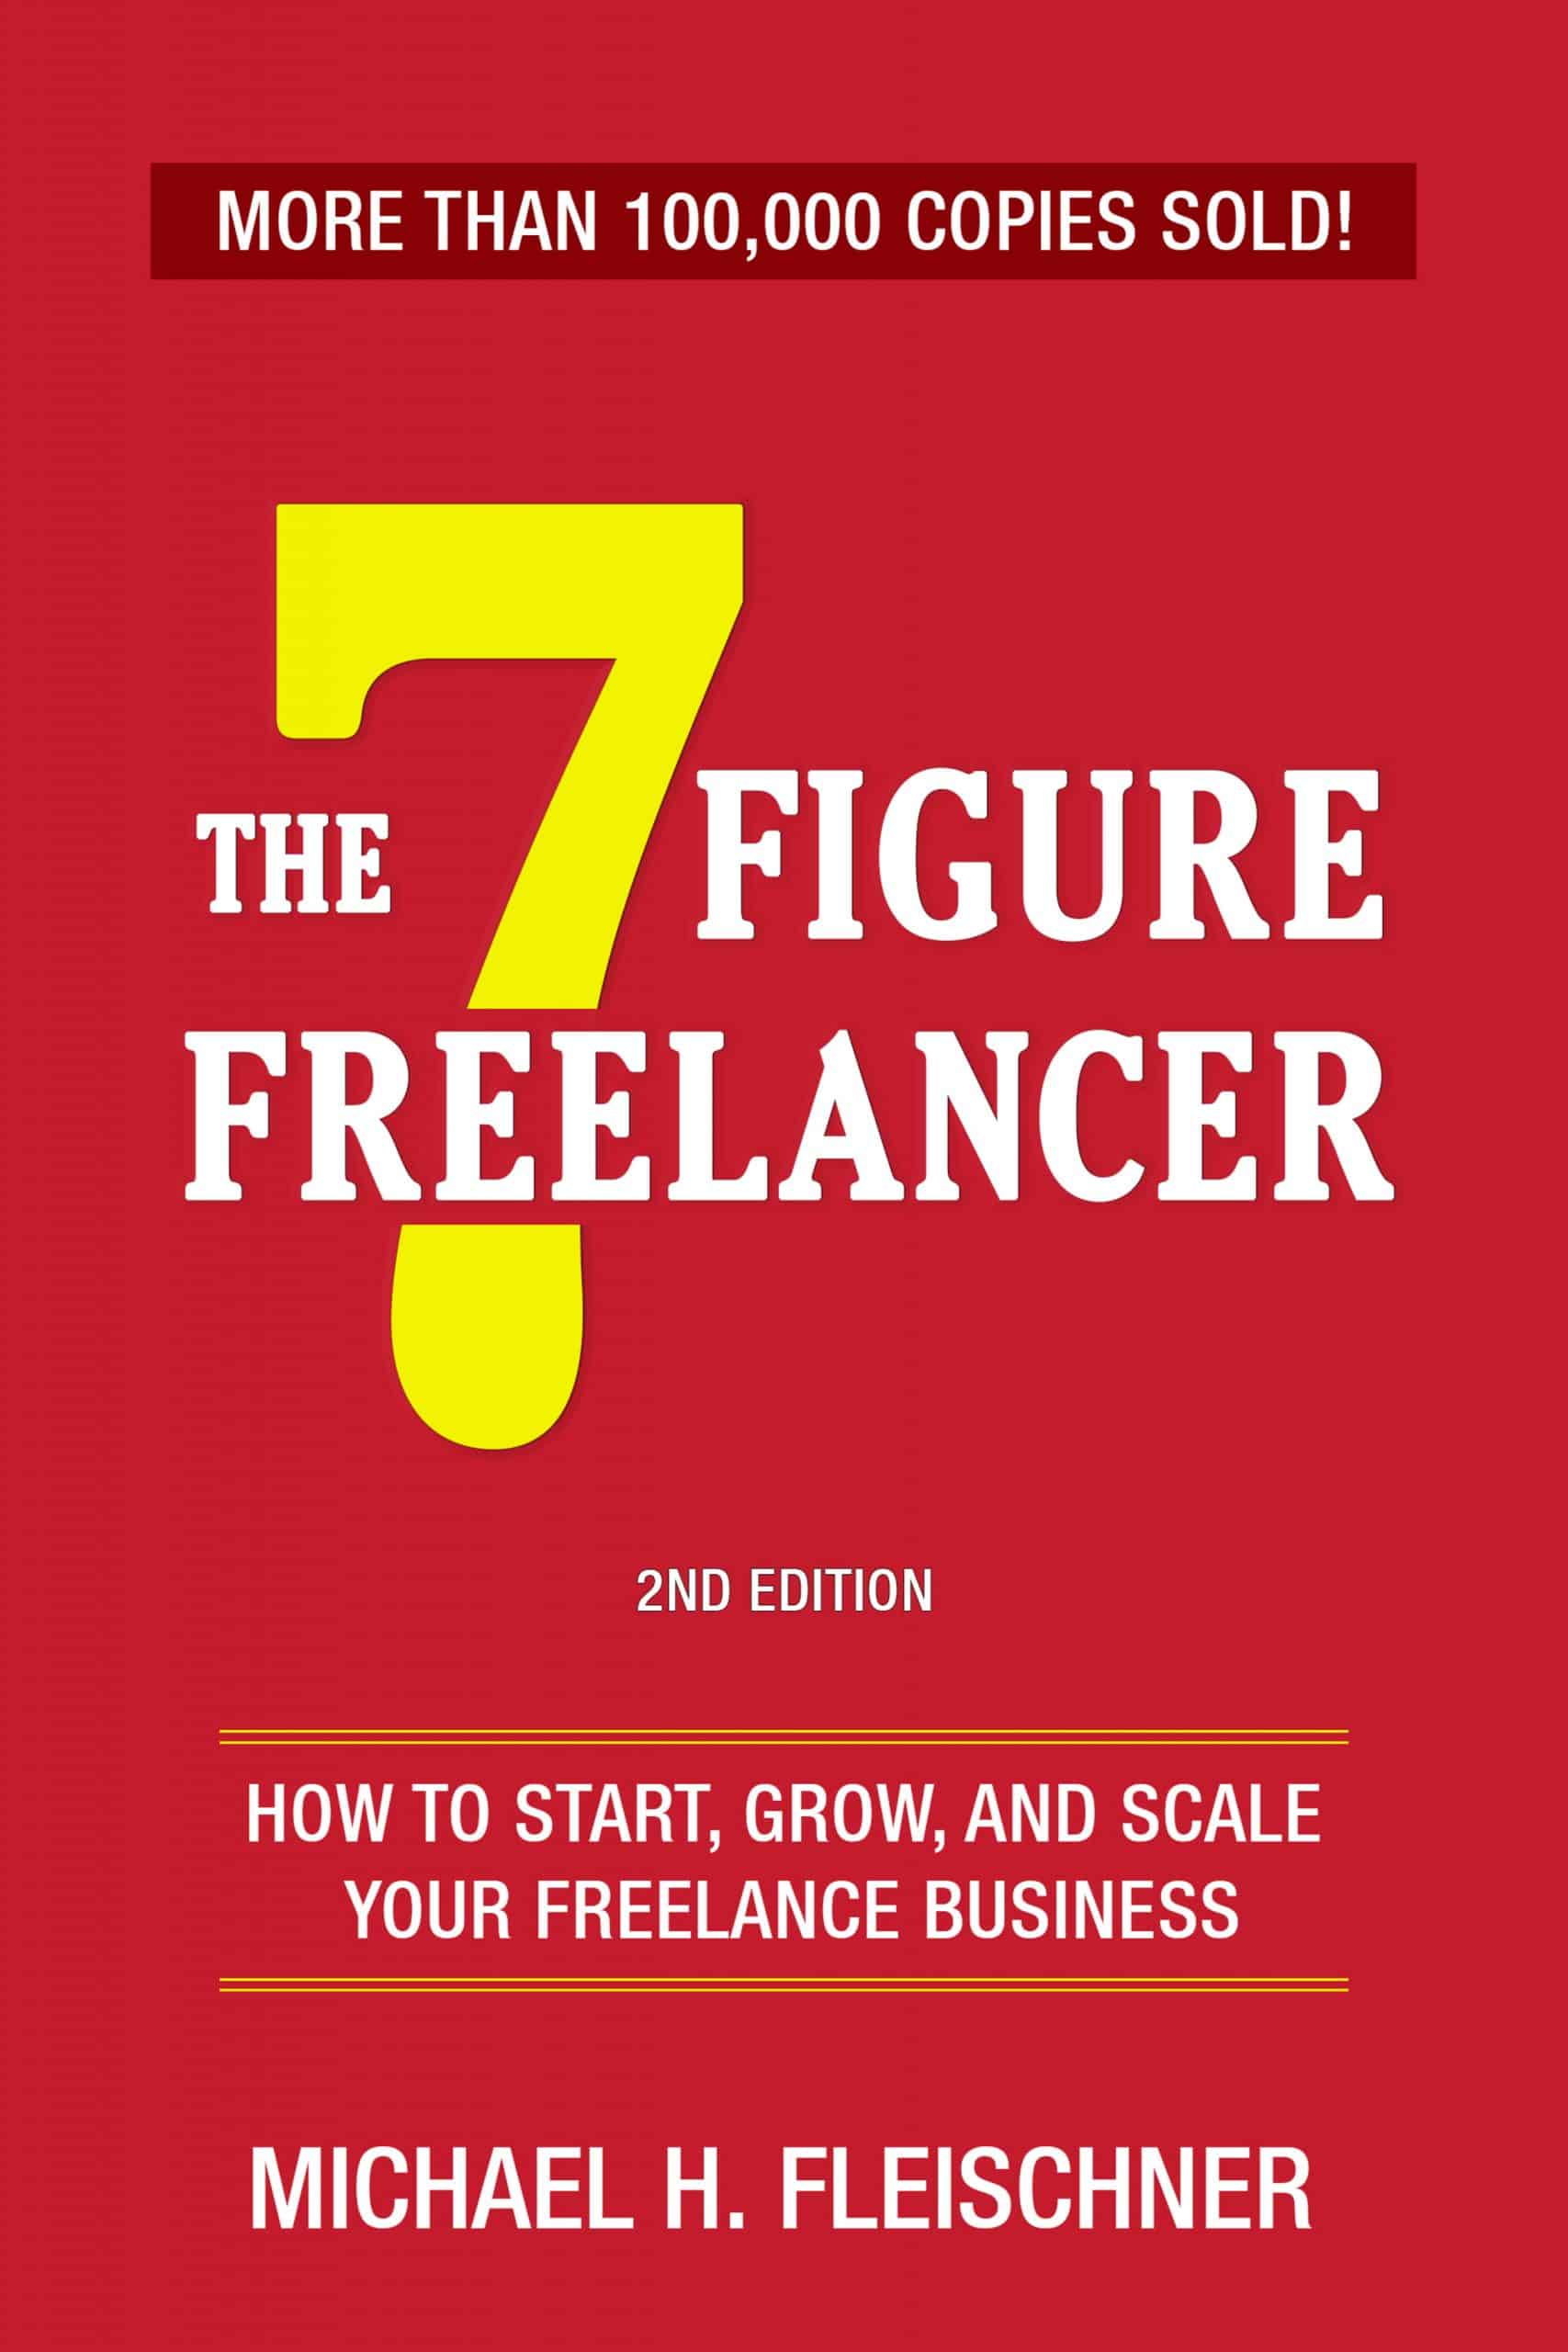 The 7 figure freelancer